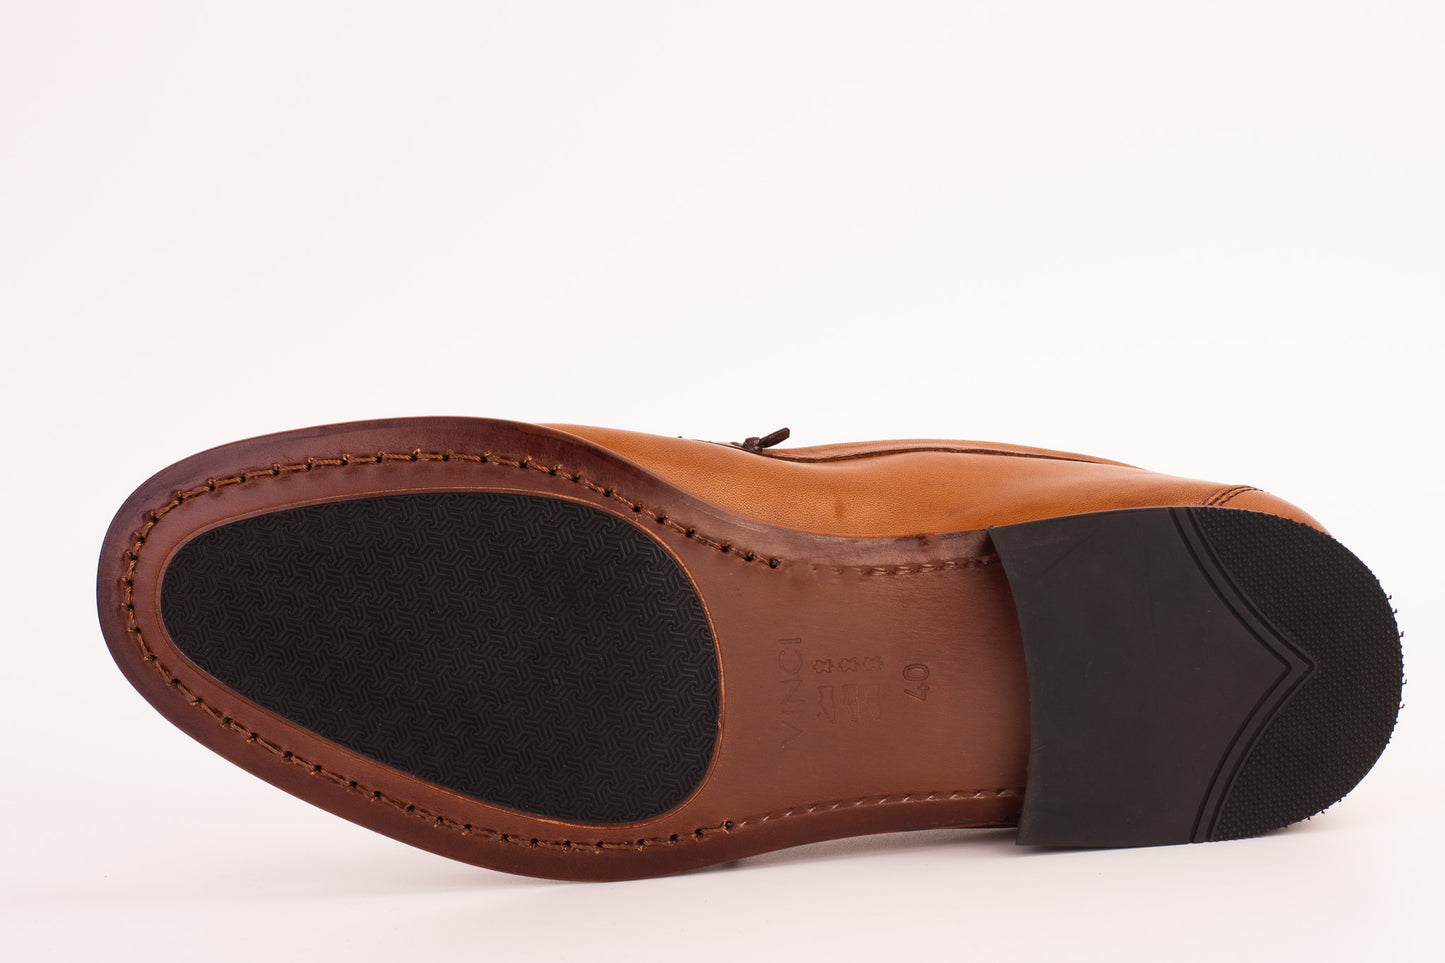 The Eregli Tan Leather Penny Loafer Men Shoe